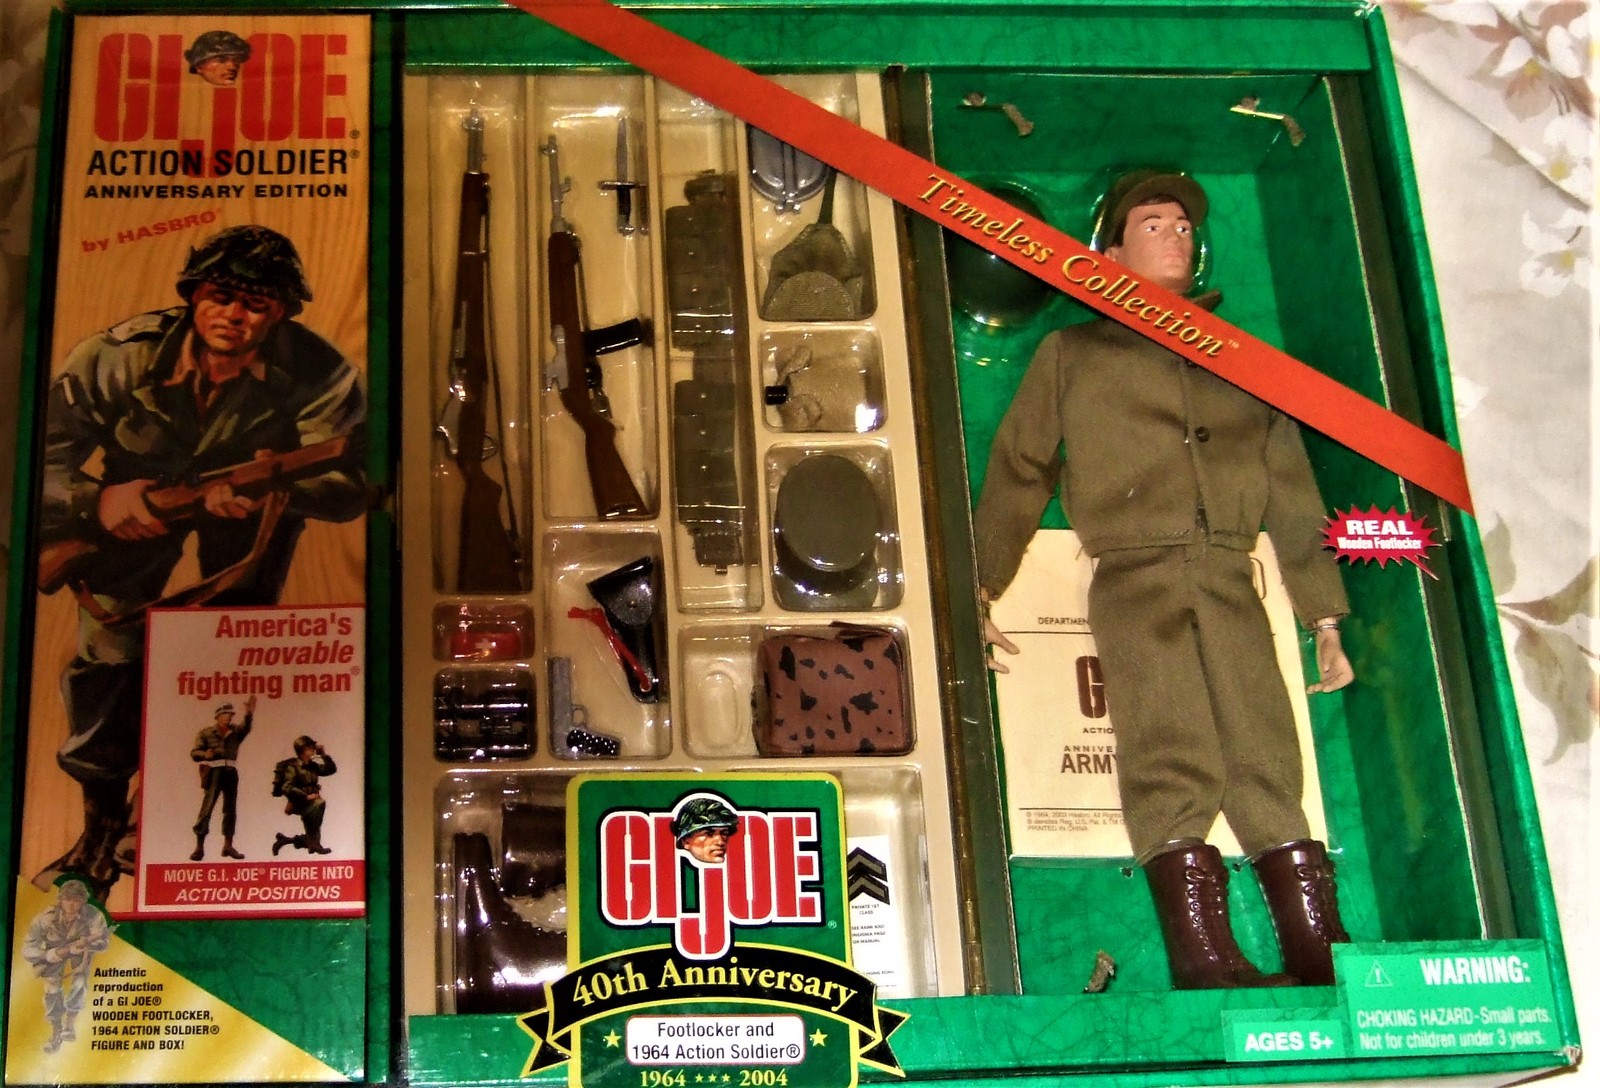 GI Joe 40th Anniversary Footlocker 1964 Action Soldier RARE Timeless